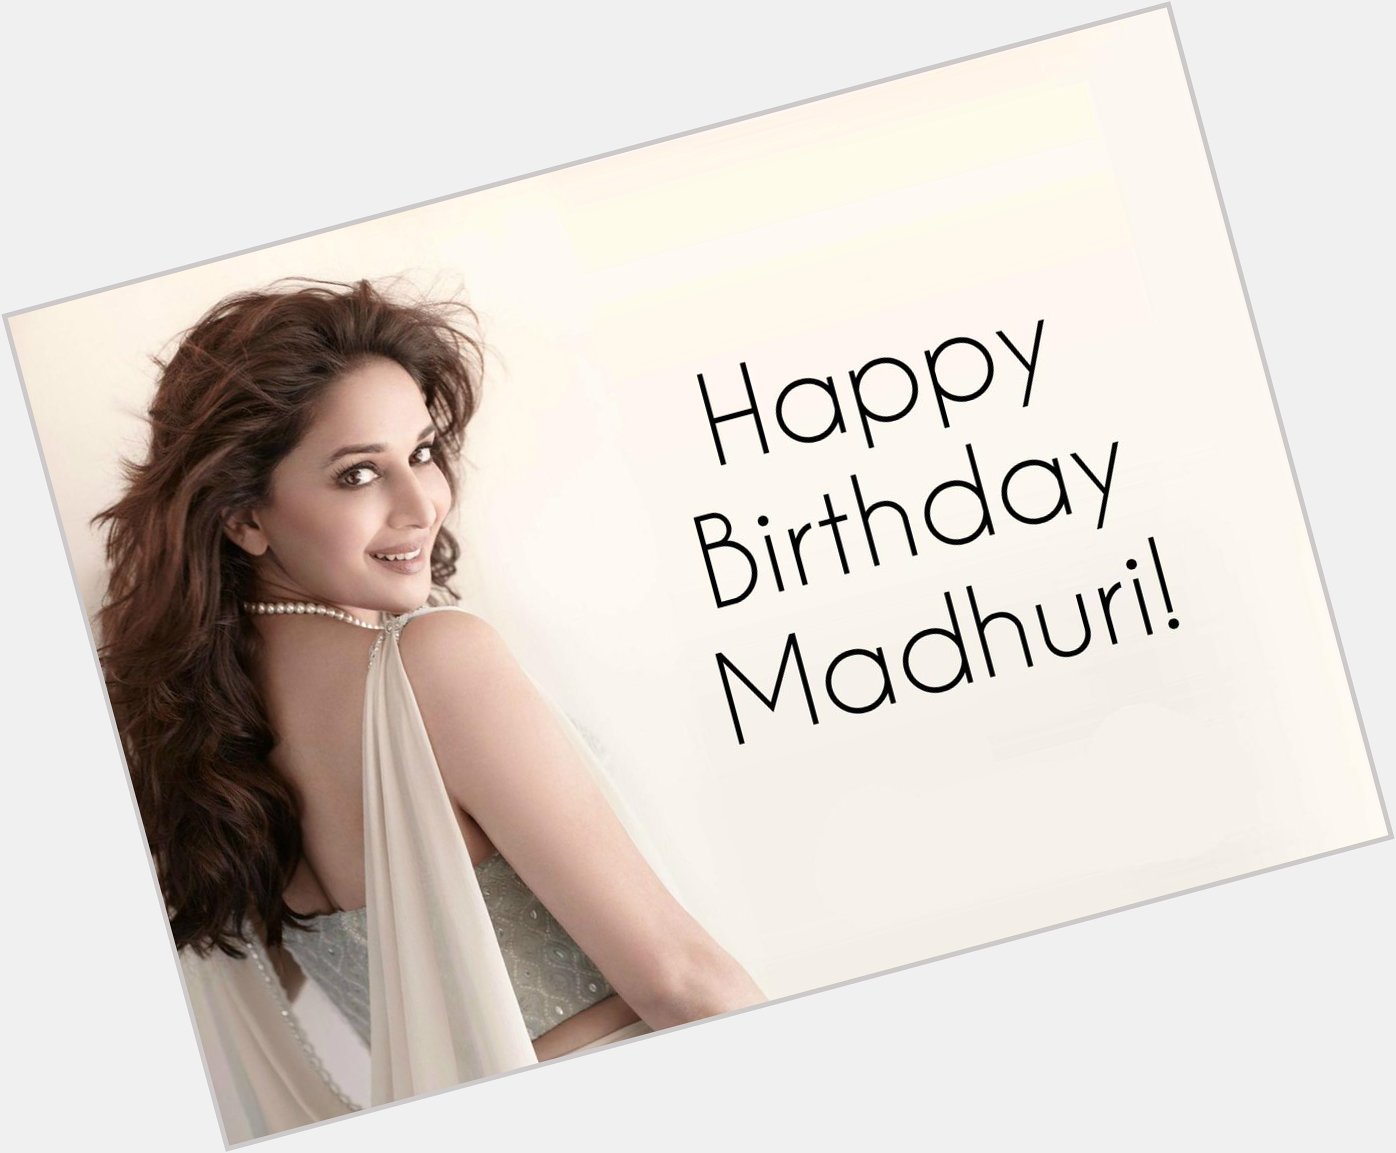 Happy Birthday Madhuri Dixit! 